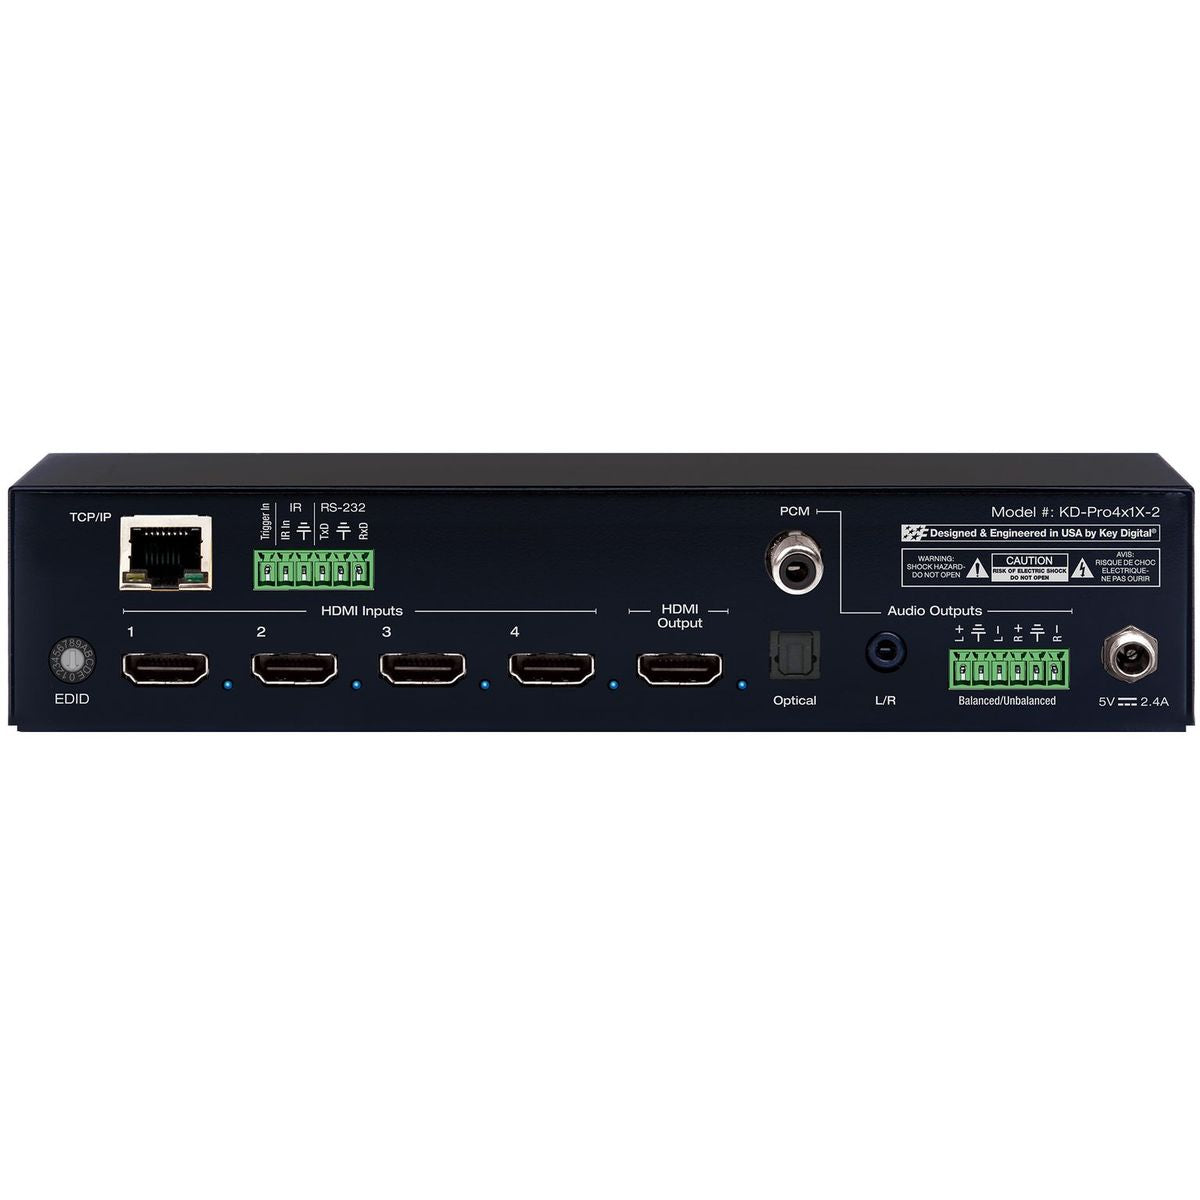 KDPro4x1X-2 Input Pro Series HDMI Auto Switcher